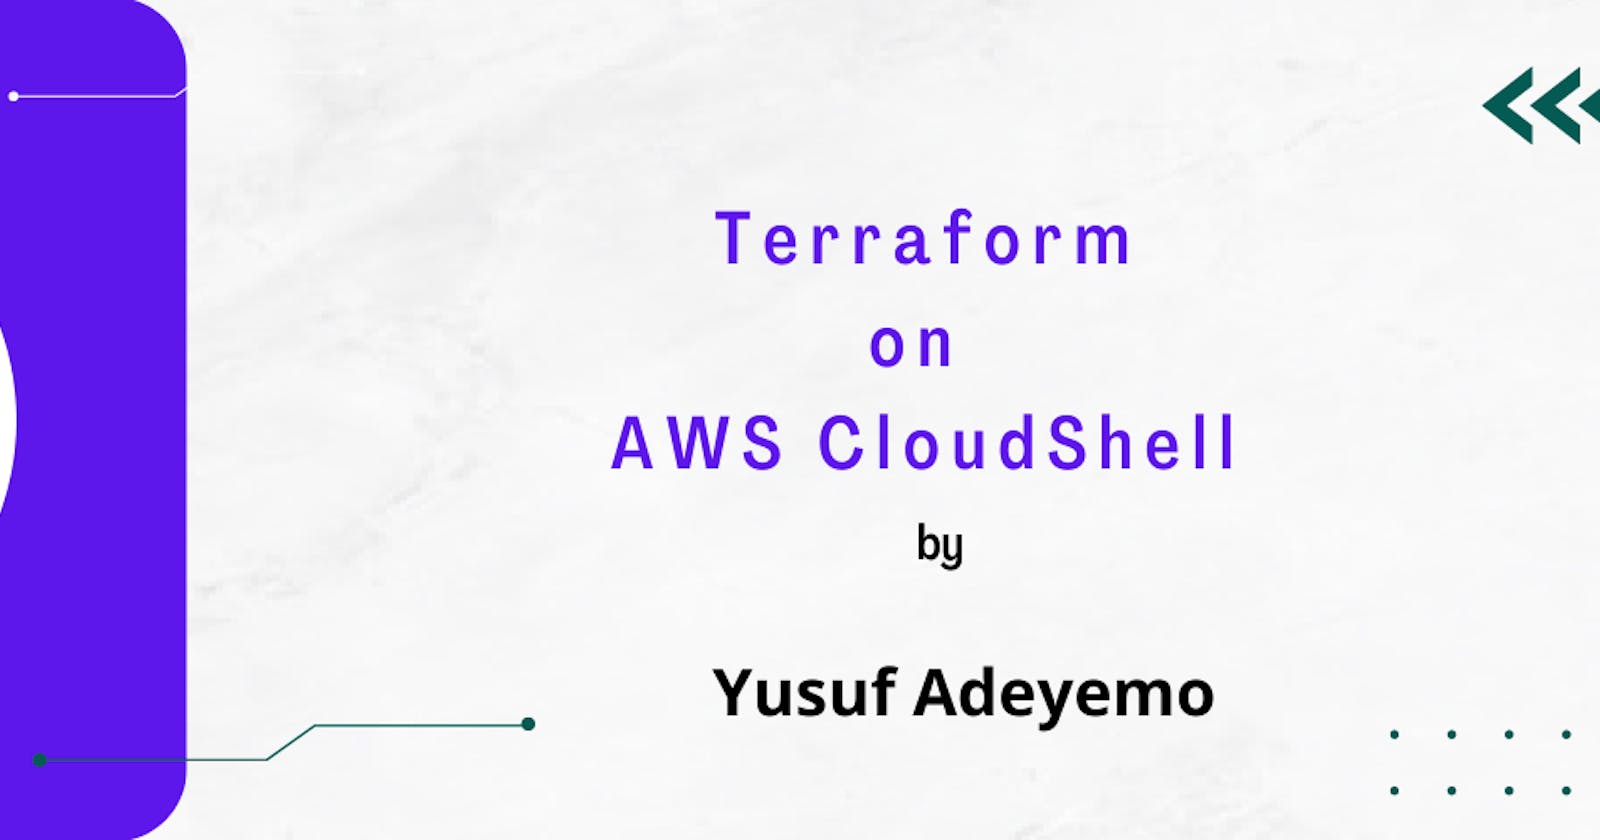 How to install Terraform on AWS CloudShell